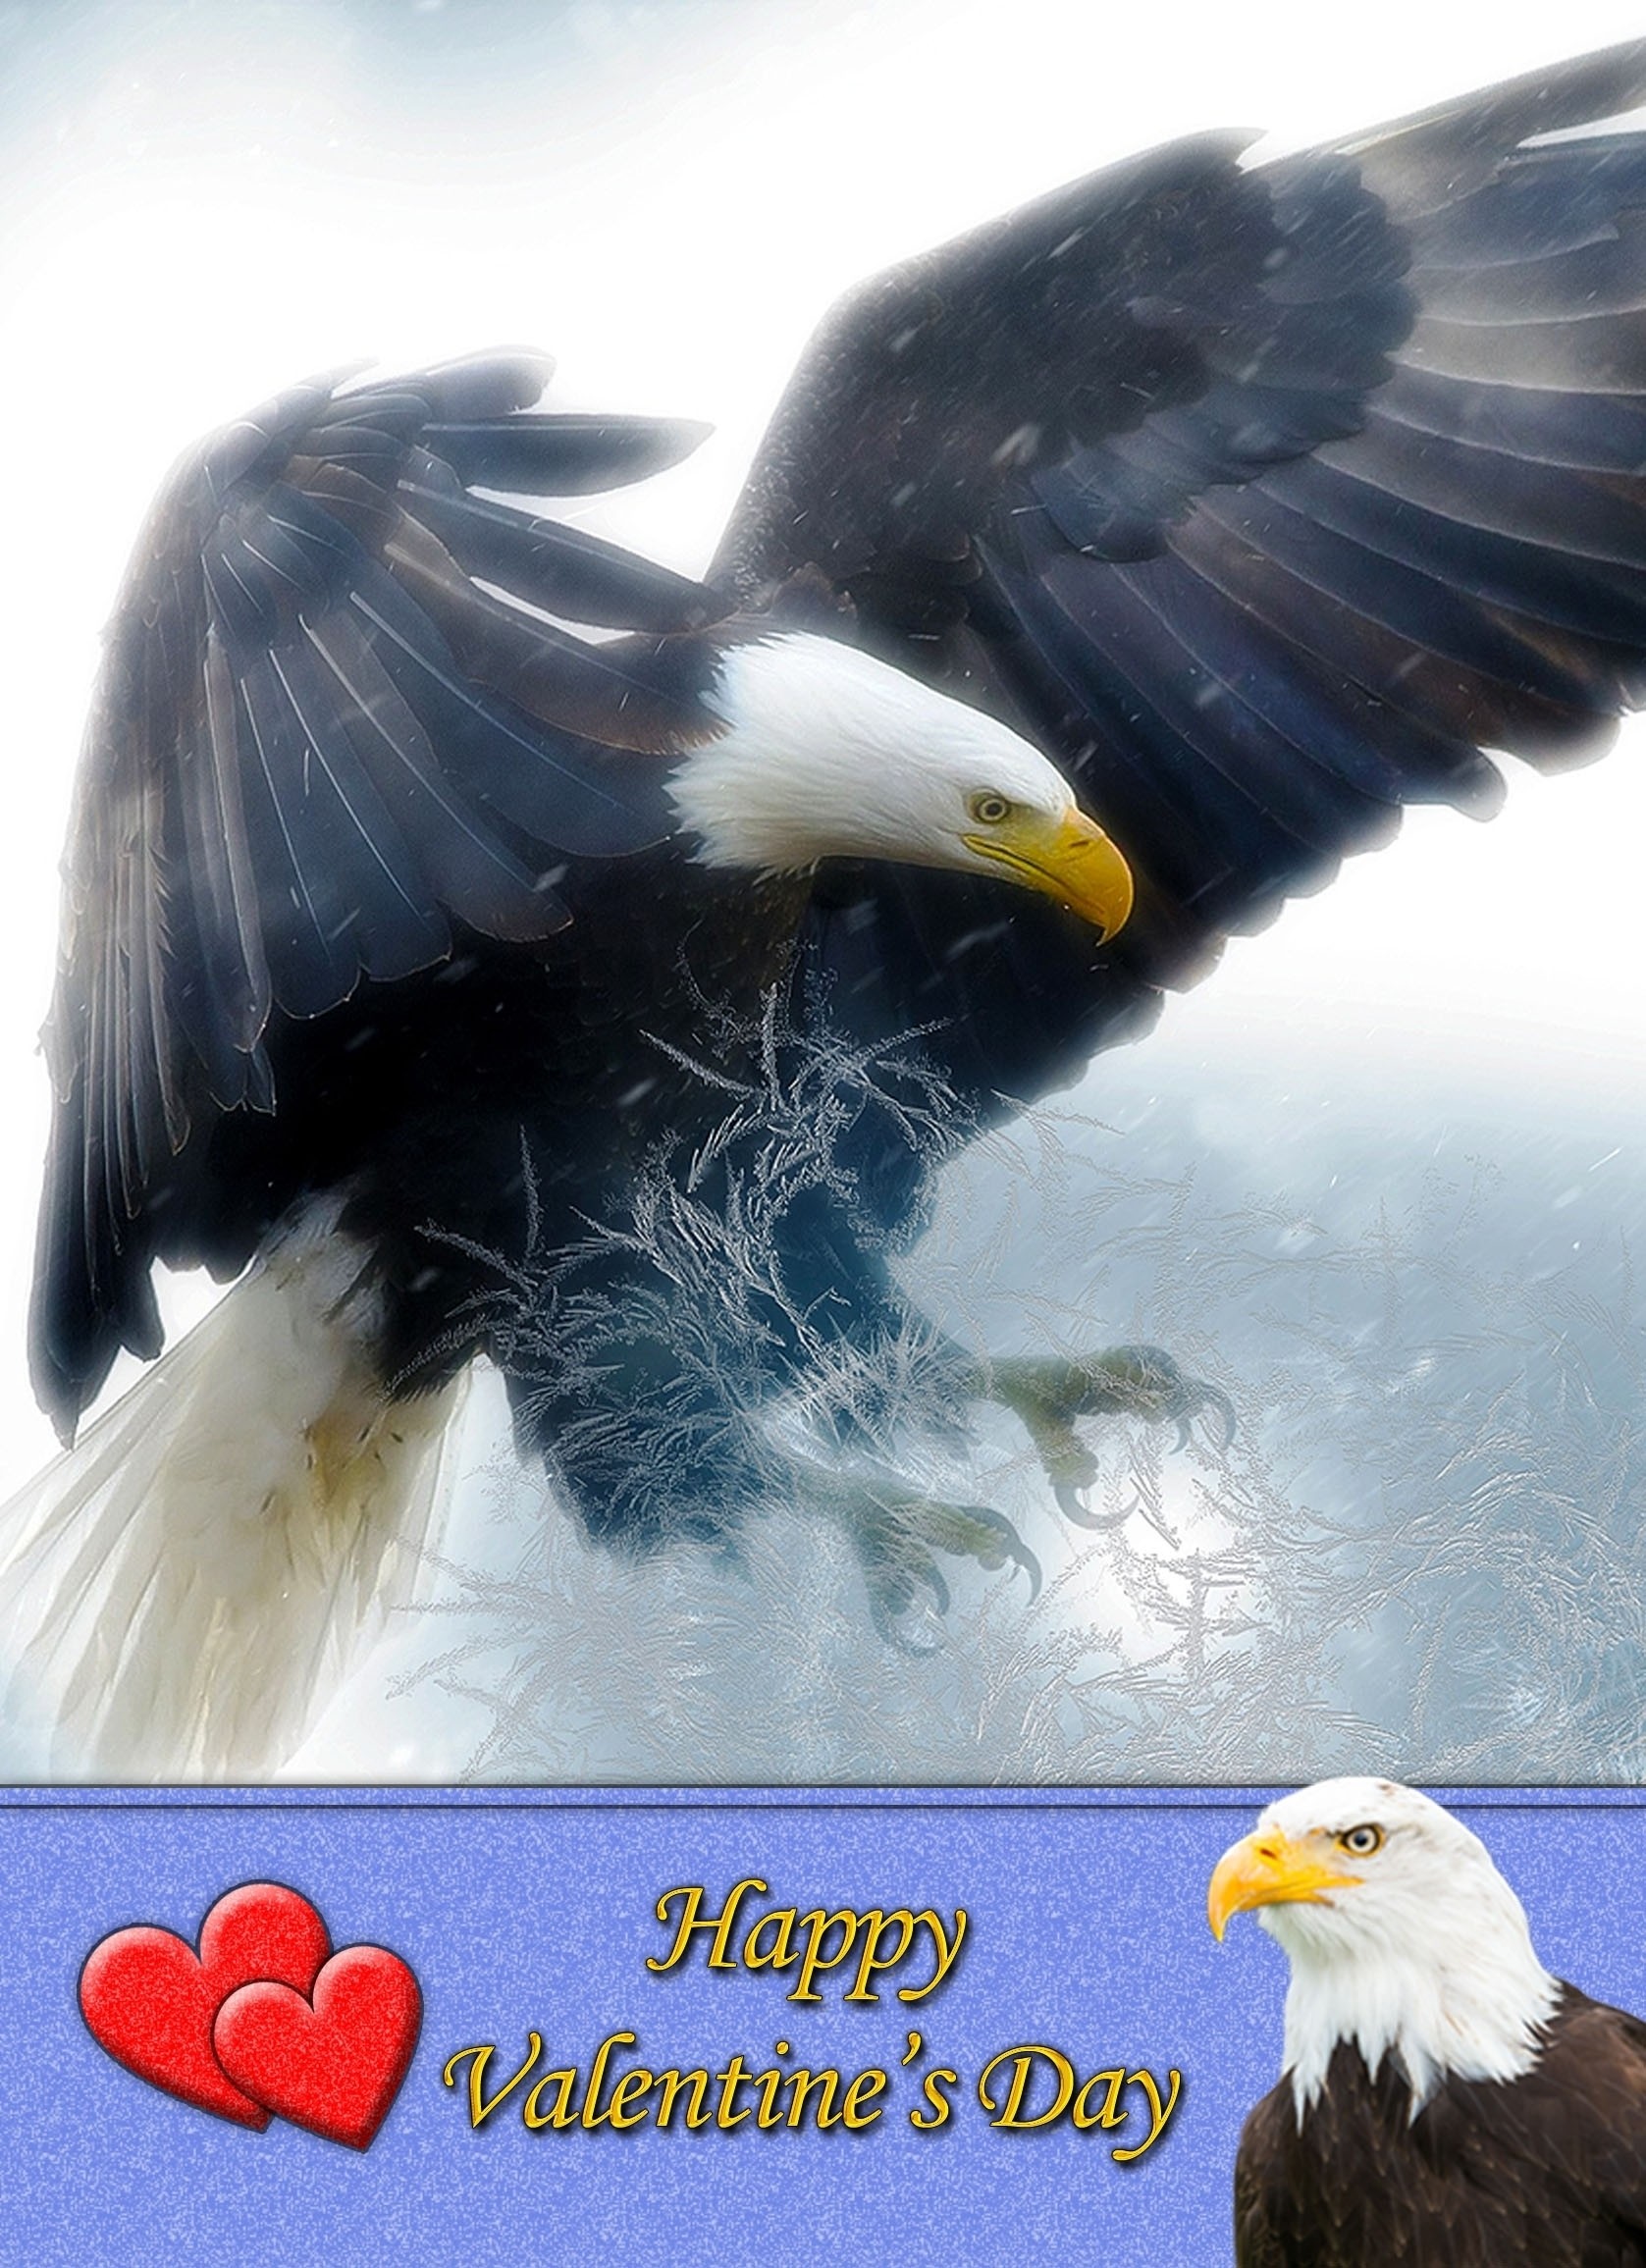 Eagle Valentine's Day Card